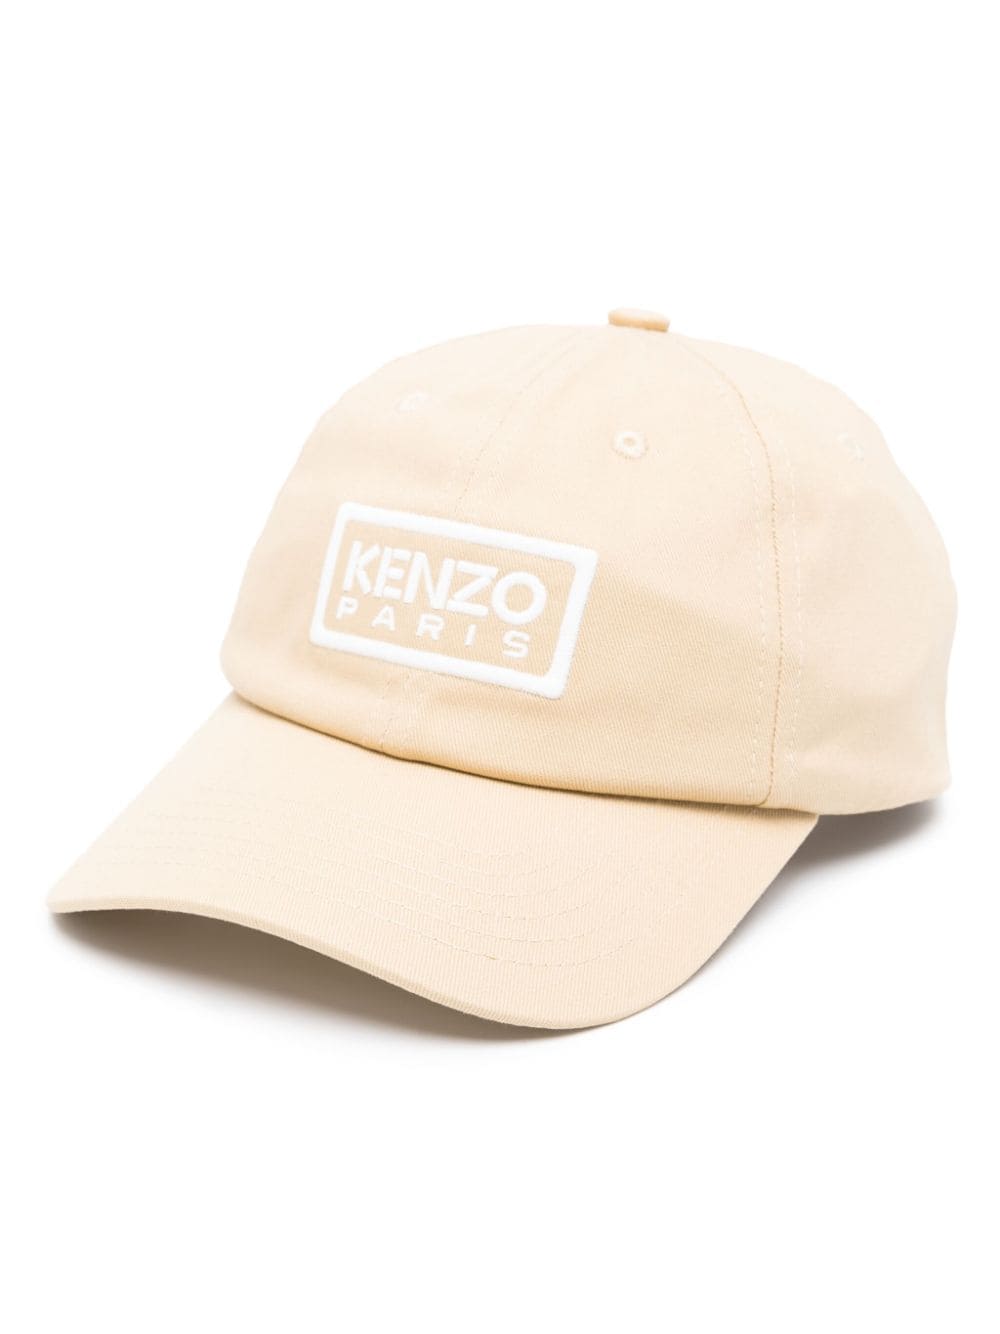 Kenzo Kenzo Tag cap - Neutrals von Kenzo